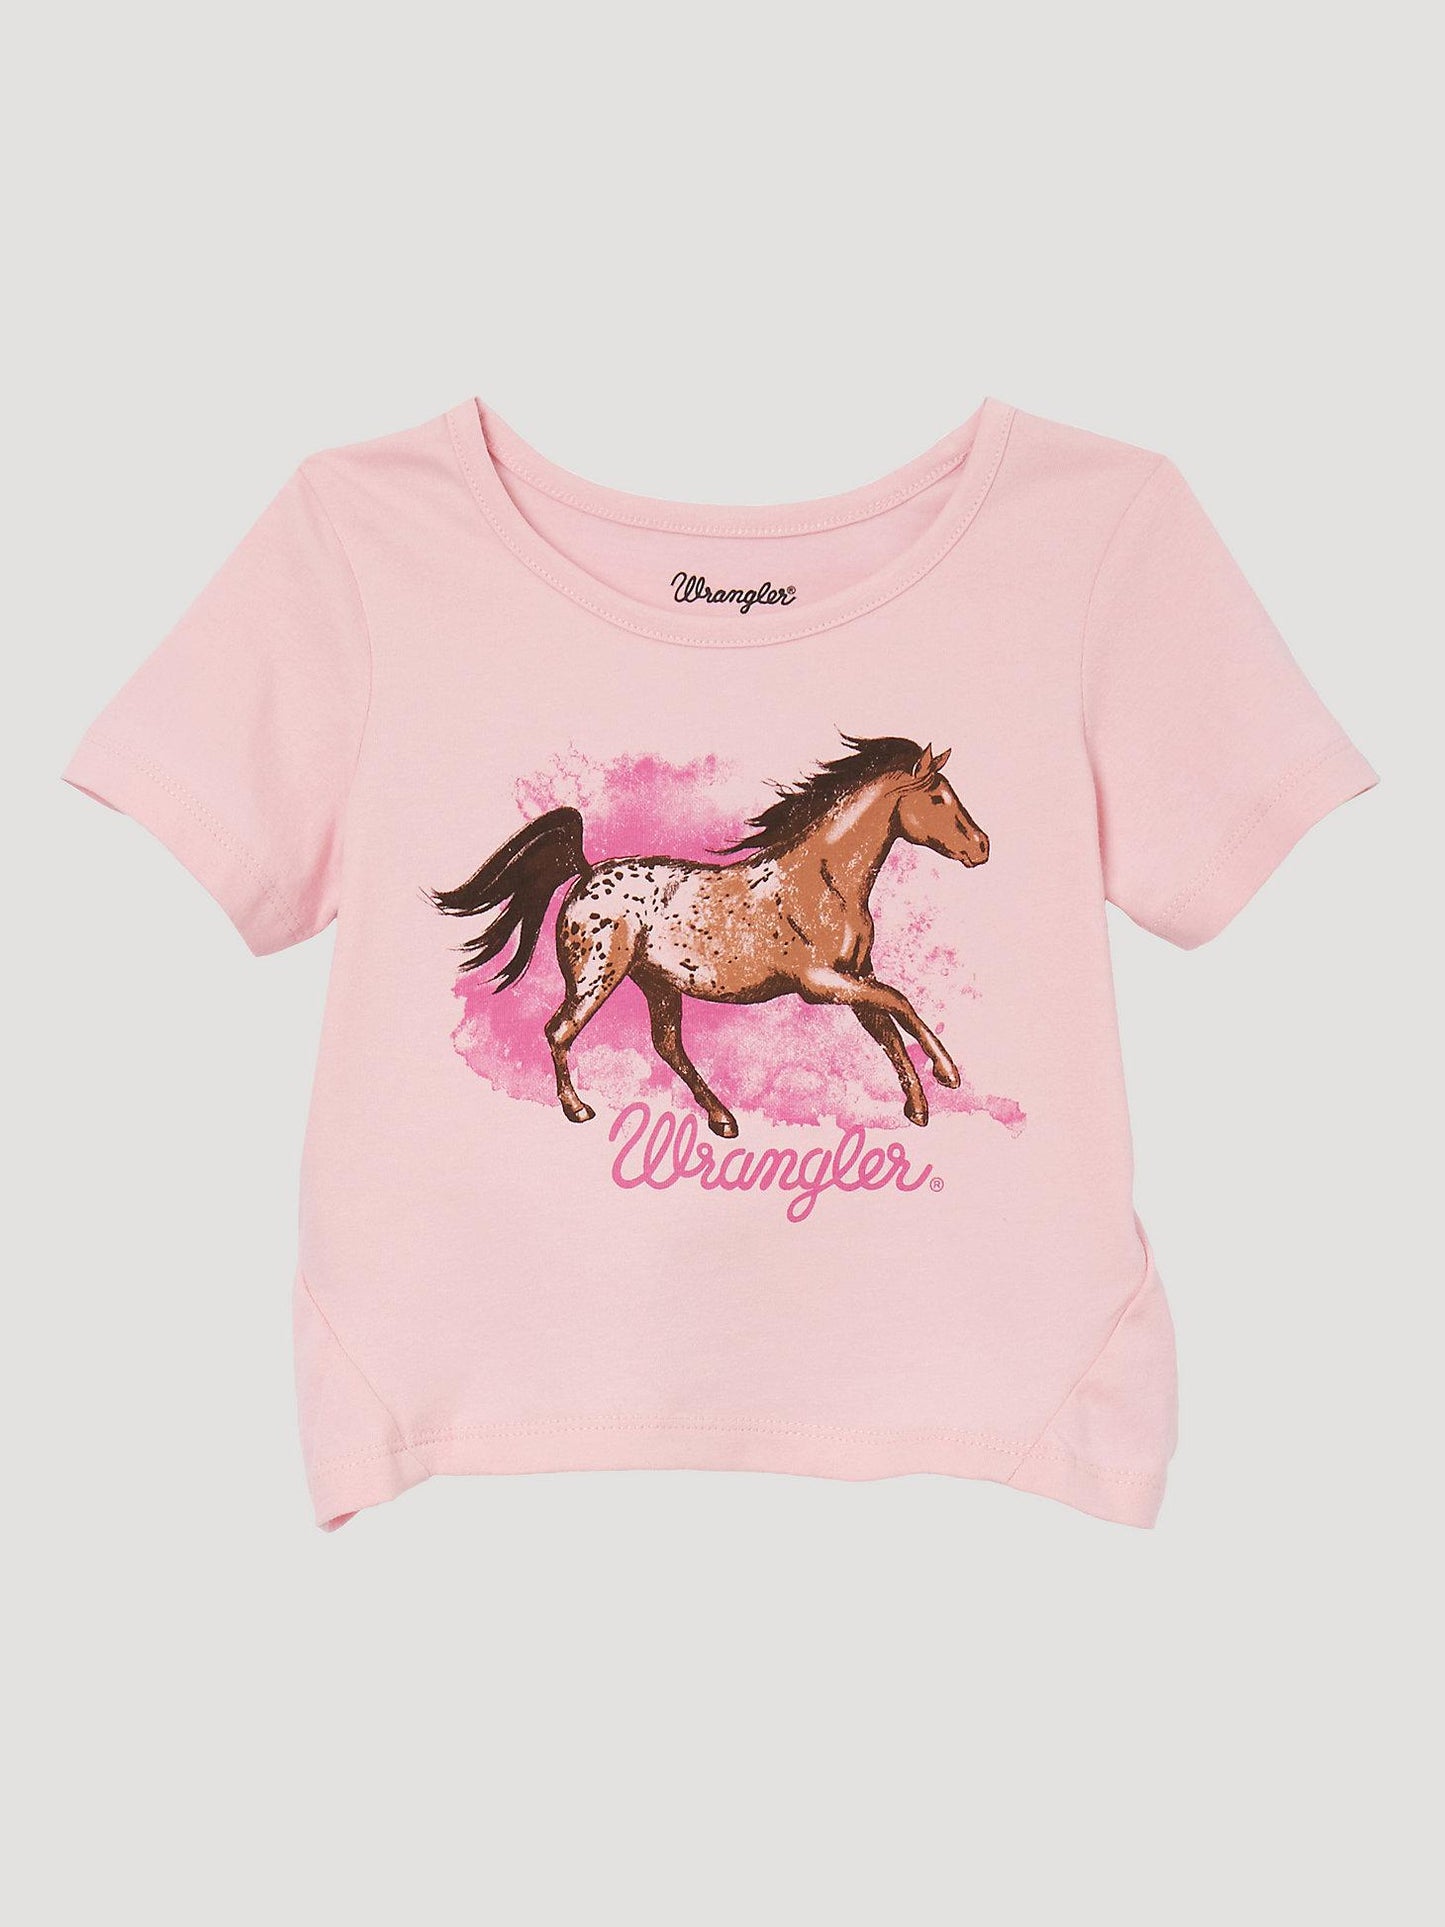 Wrangler Baby Pink Horse Tee